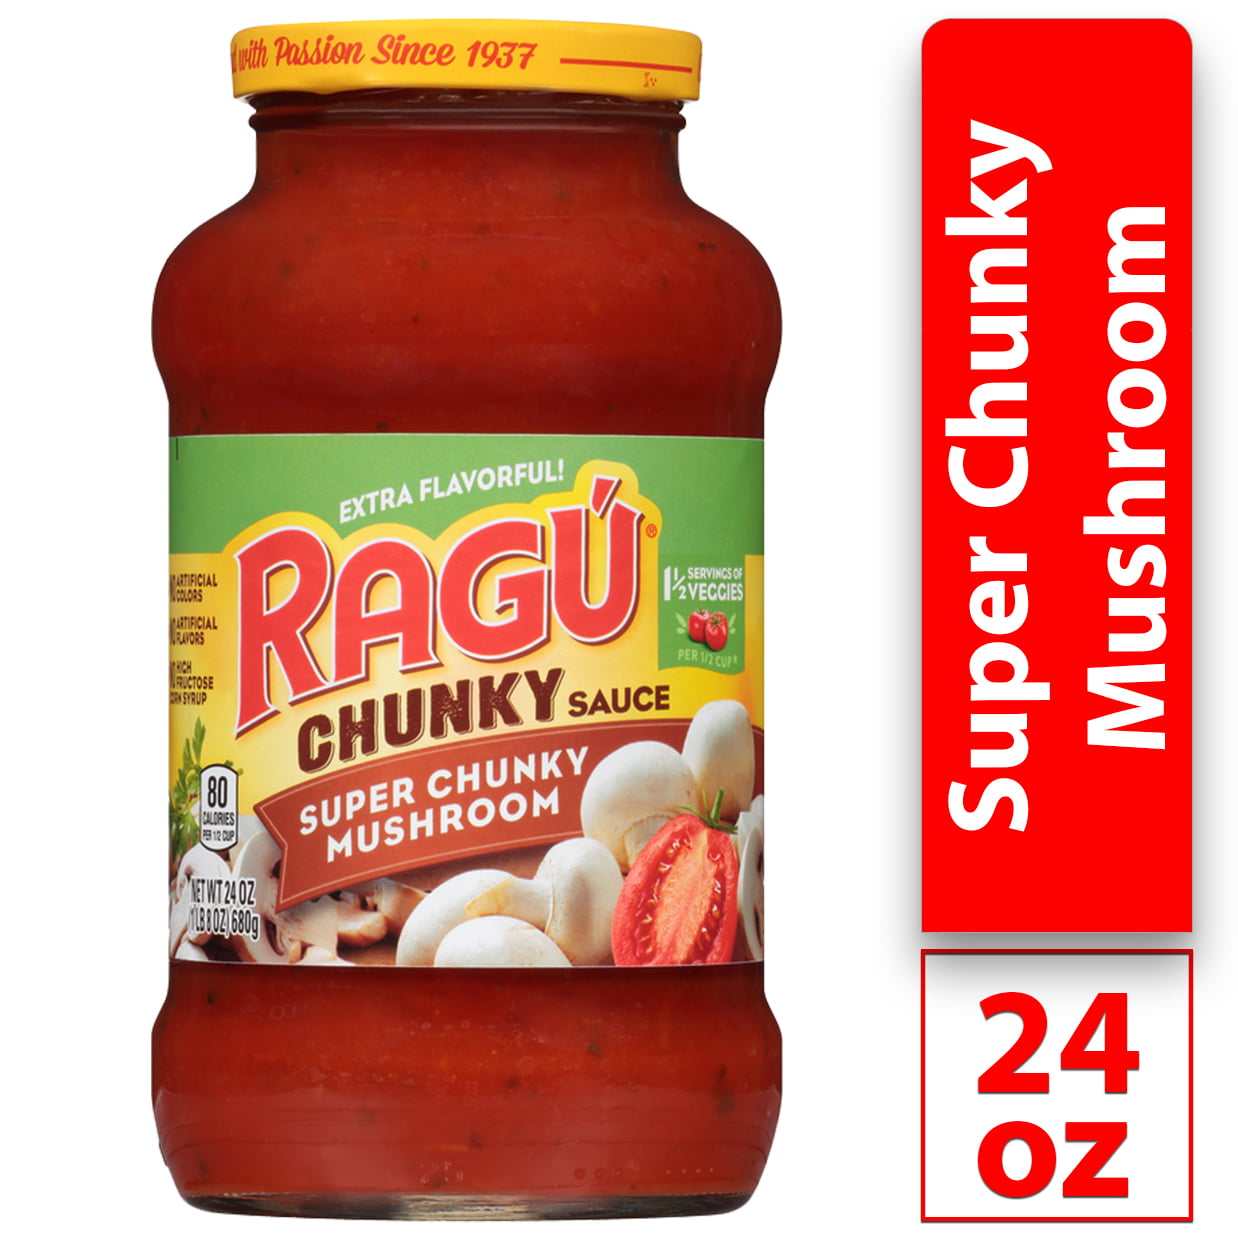 Ragú Super Chunky Mushroom Pasta Sauce, 24 oz. - Walmart.com - Walmart.com